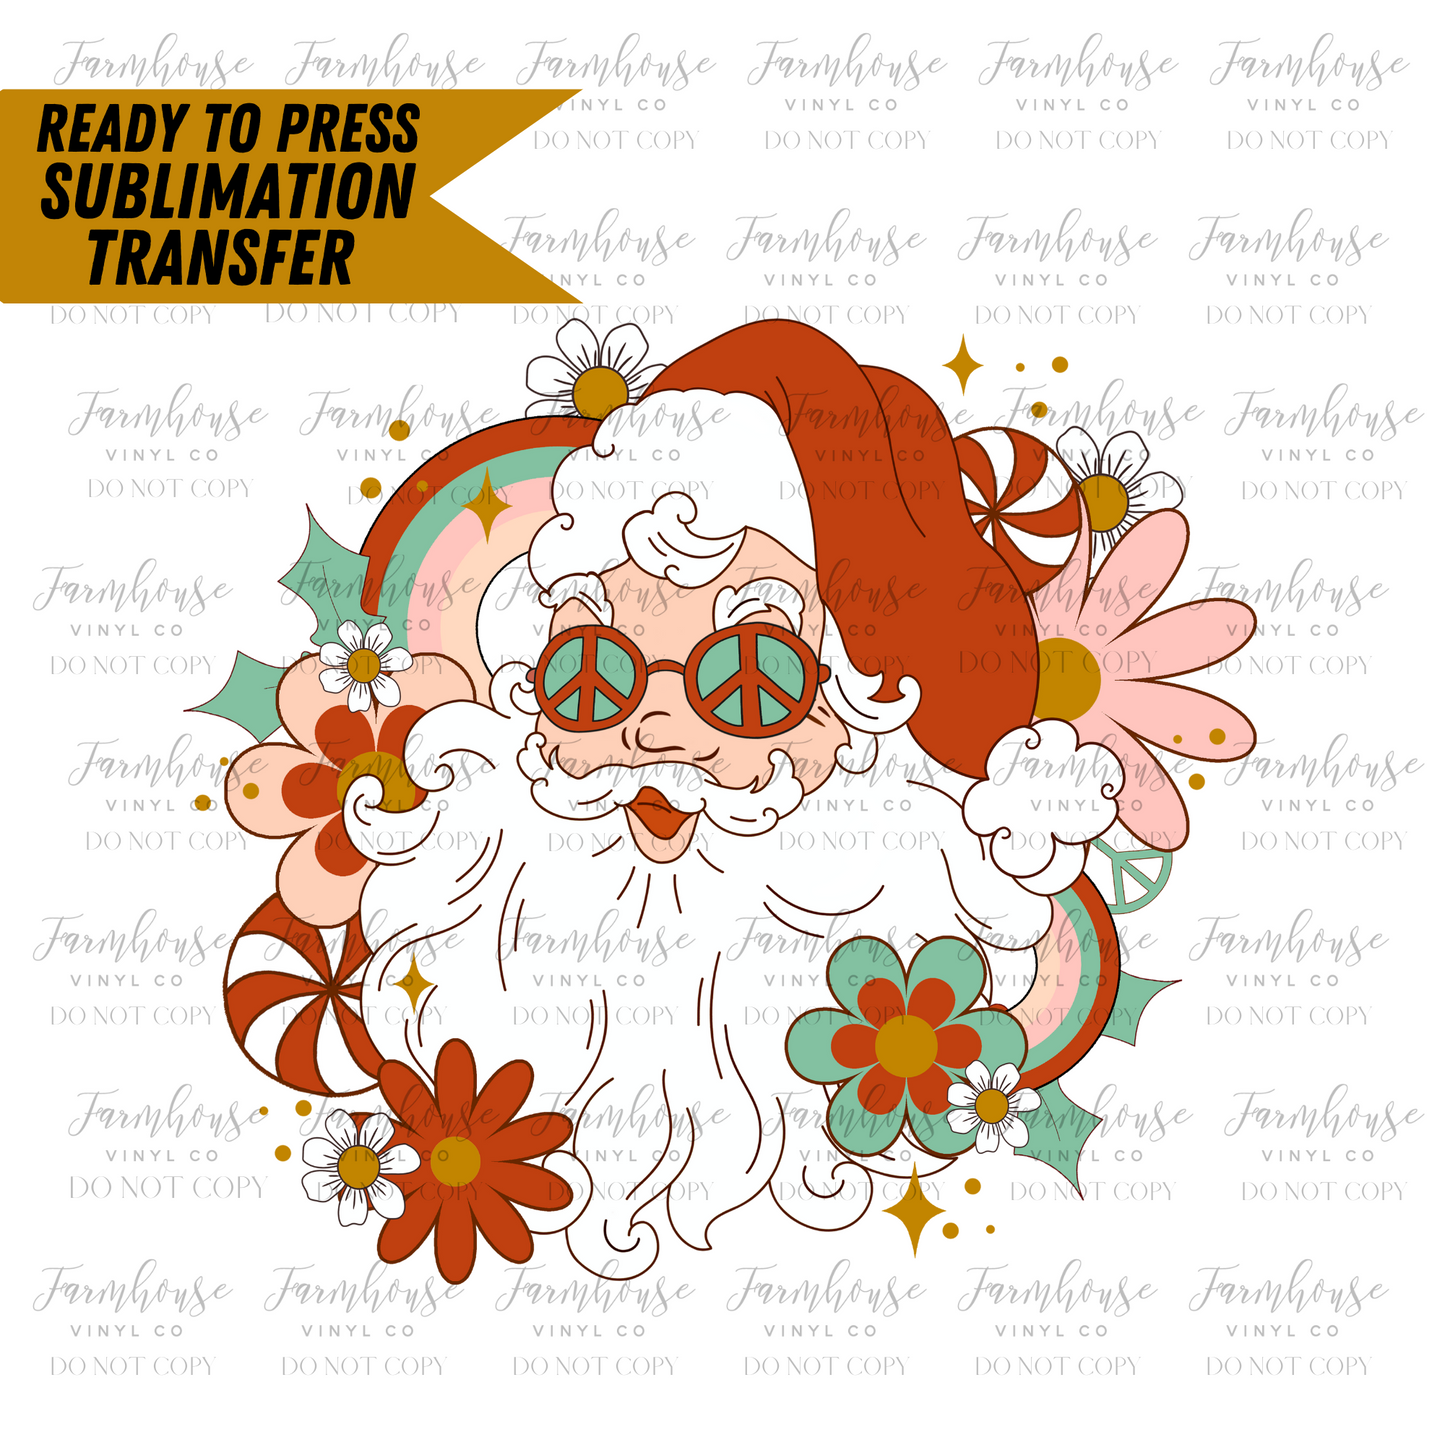 Retro Hippie Santa Claus Ready To Press Sublimation Transfer Design - Farmhouse Vinyl Co